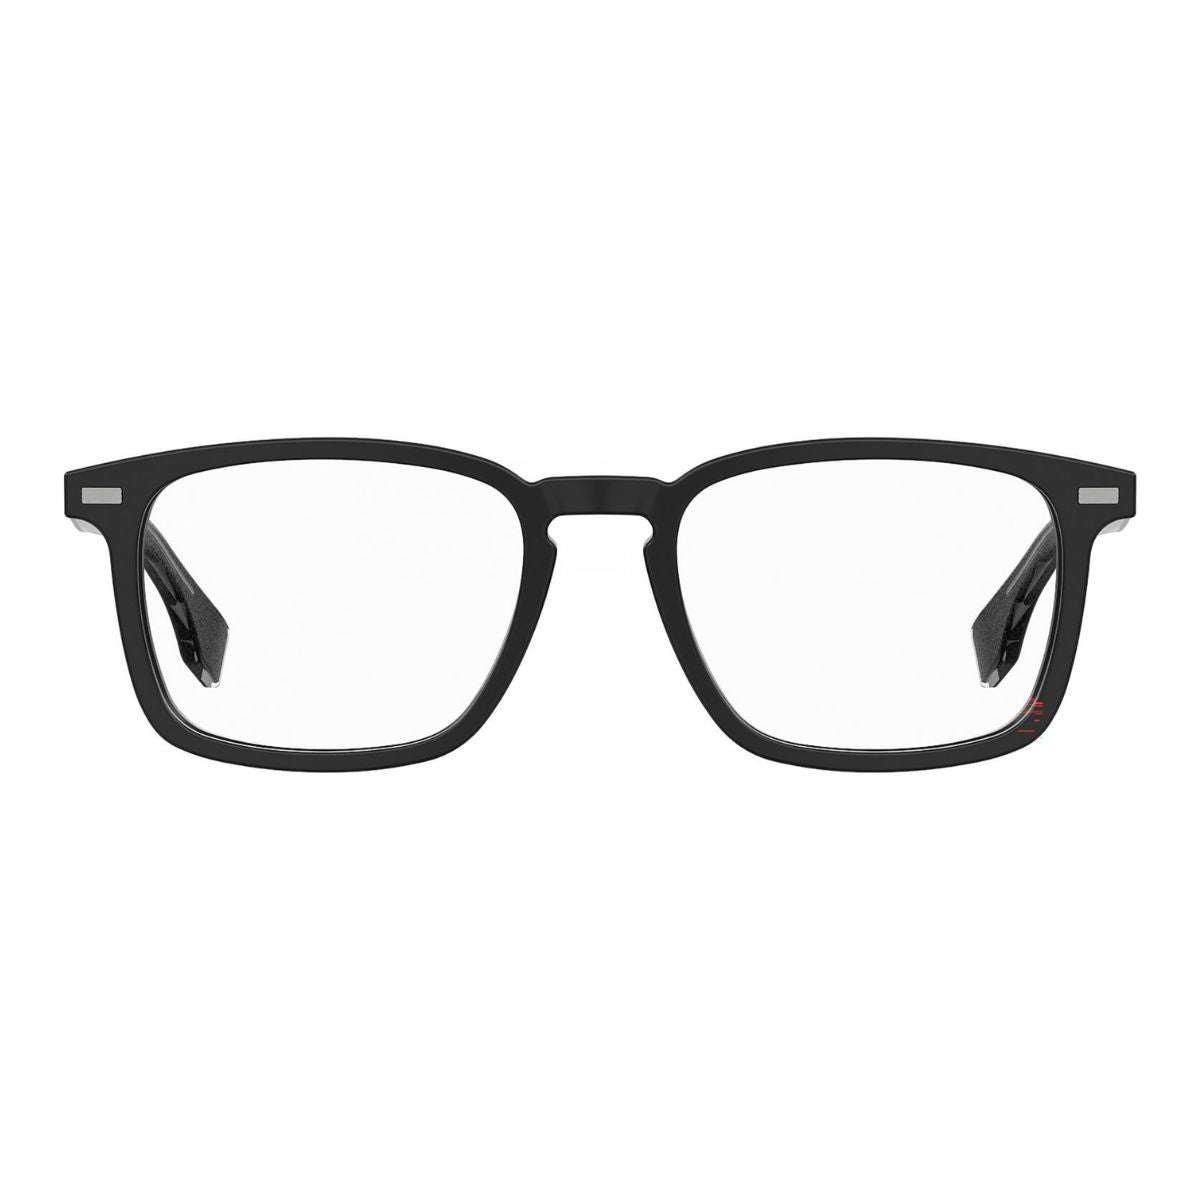 "stylish Boss 1368 807 trendy eyewear frame for men's online at optorium"